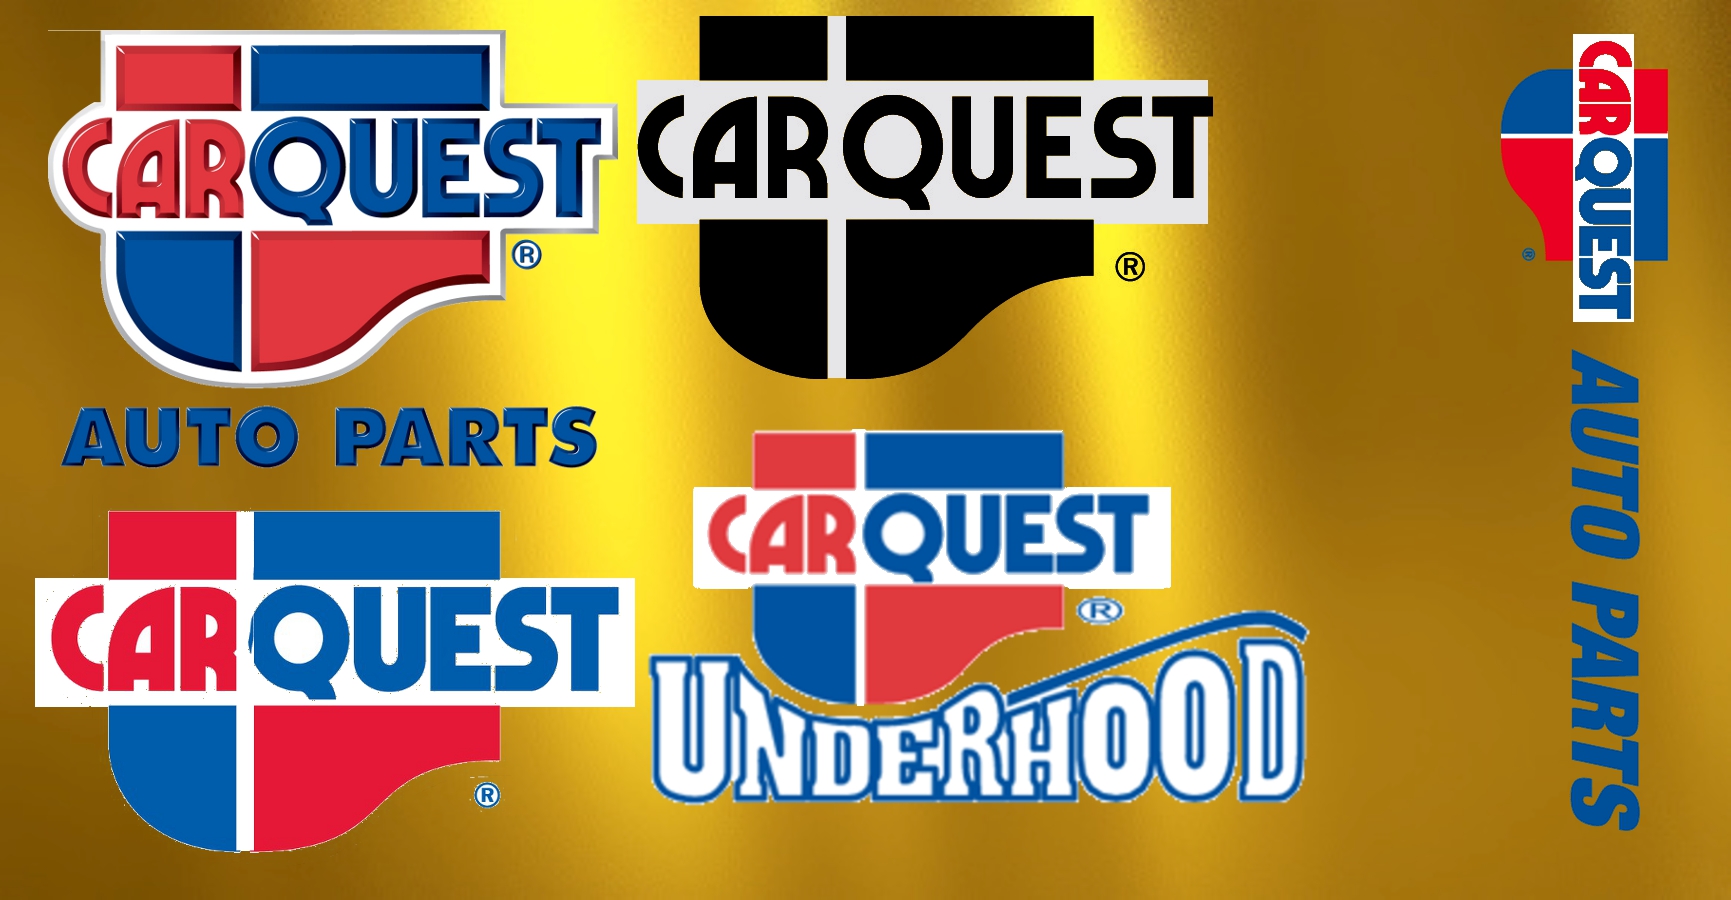 Carquest logos.jpg